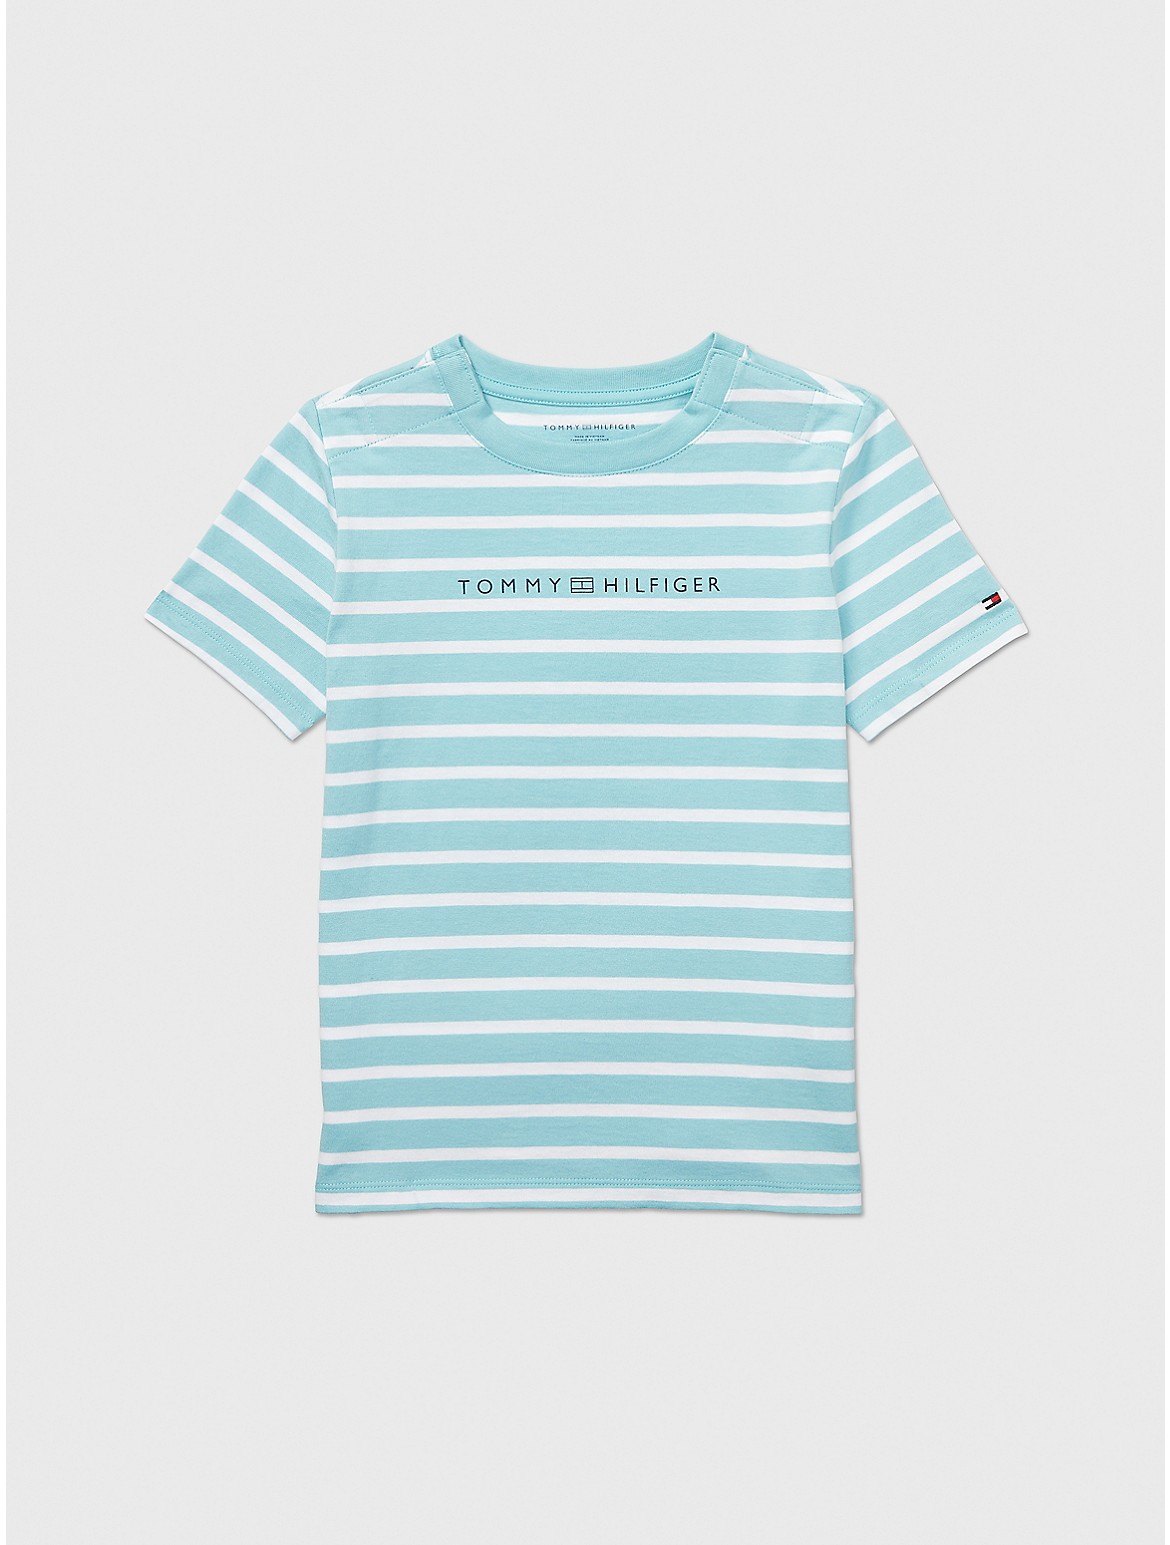 Tommy Hilfiger Boys' Kids' Stripe T-Shirt